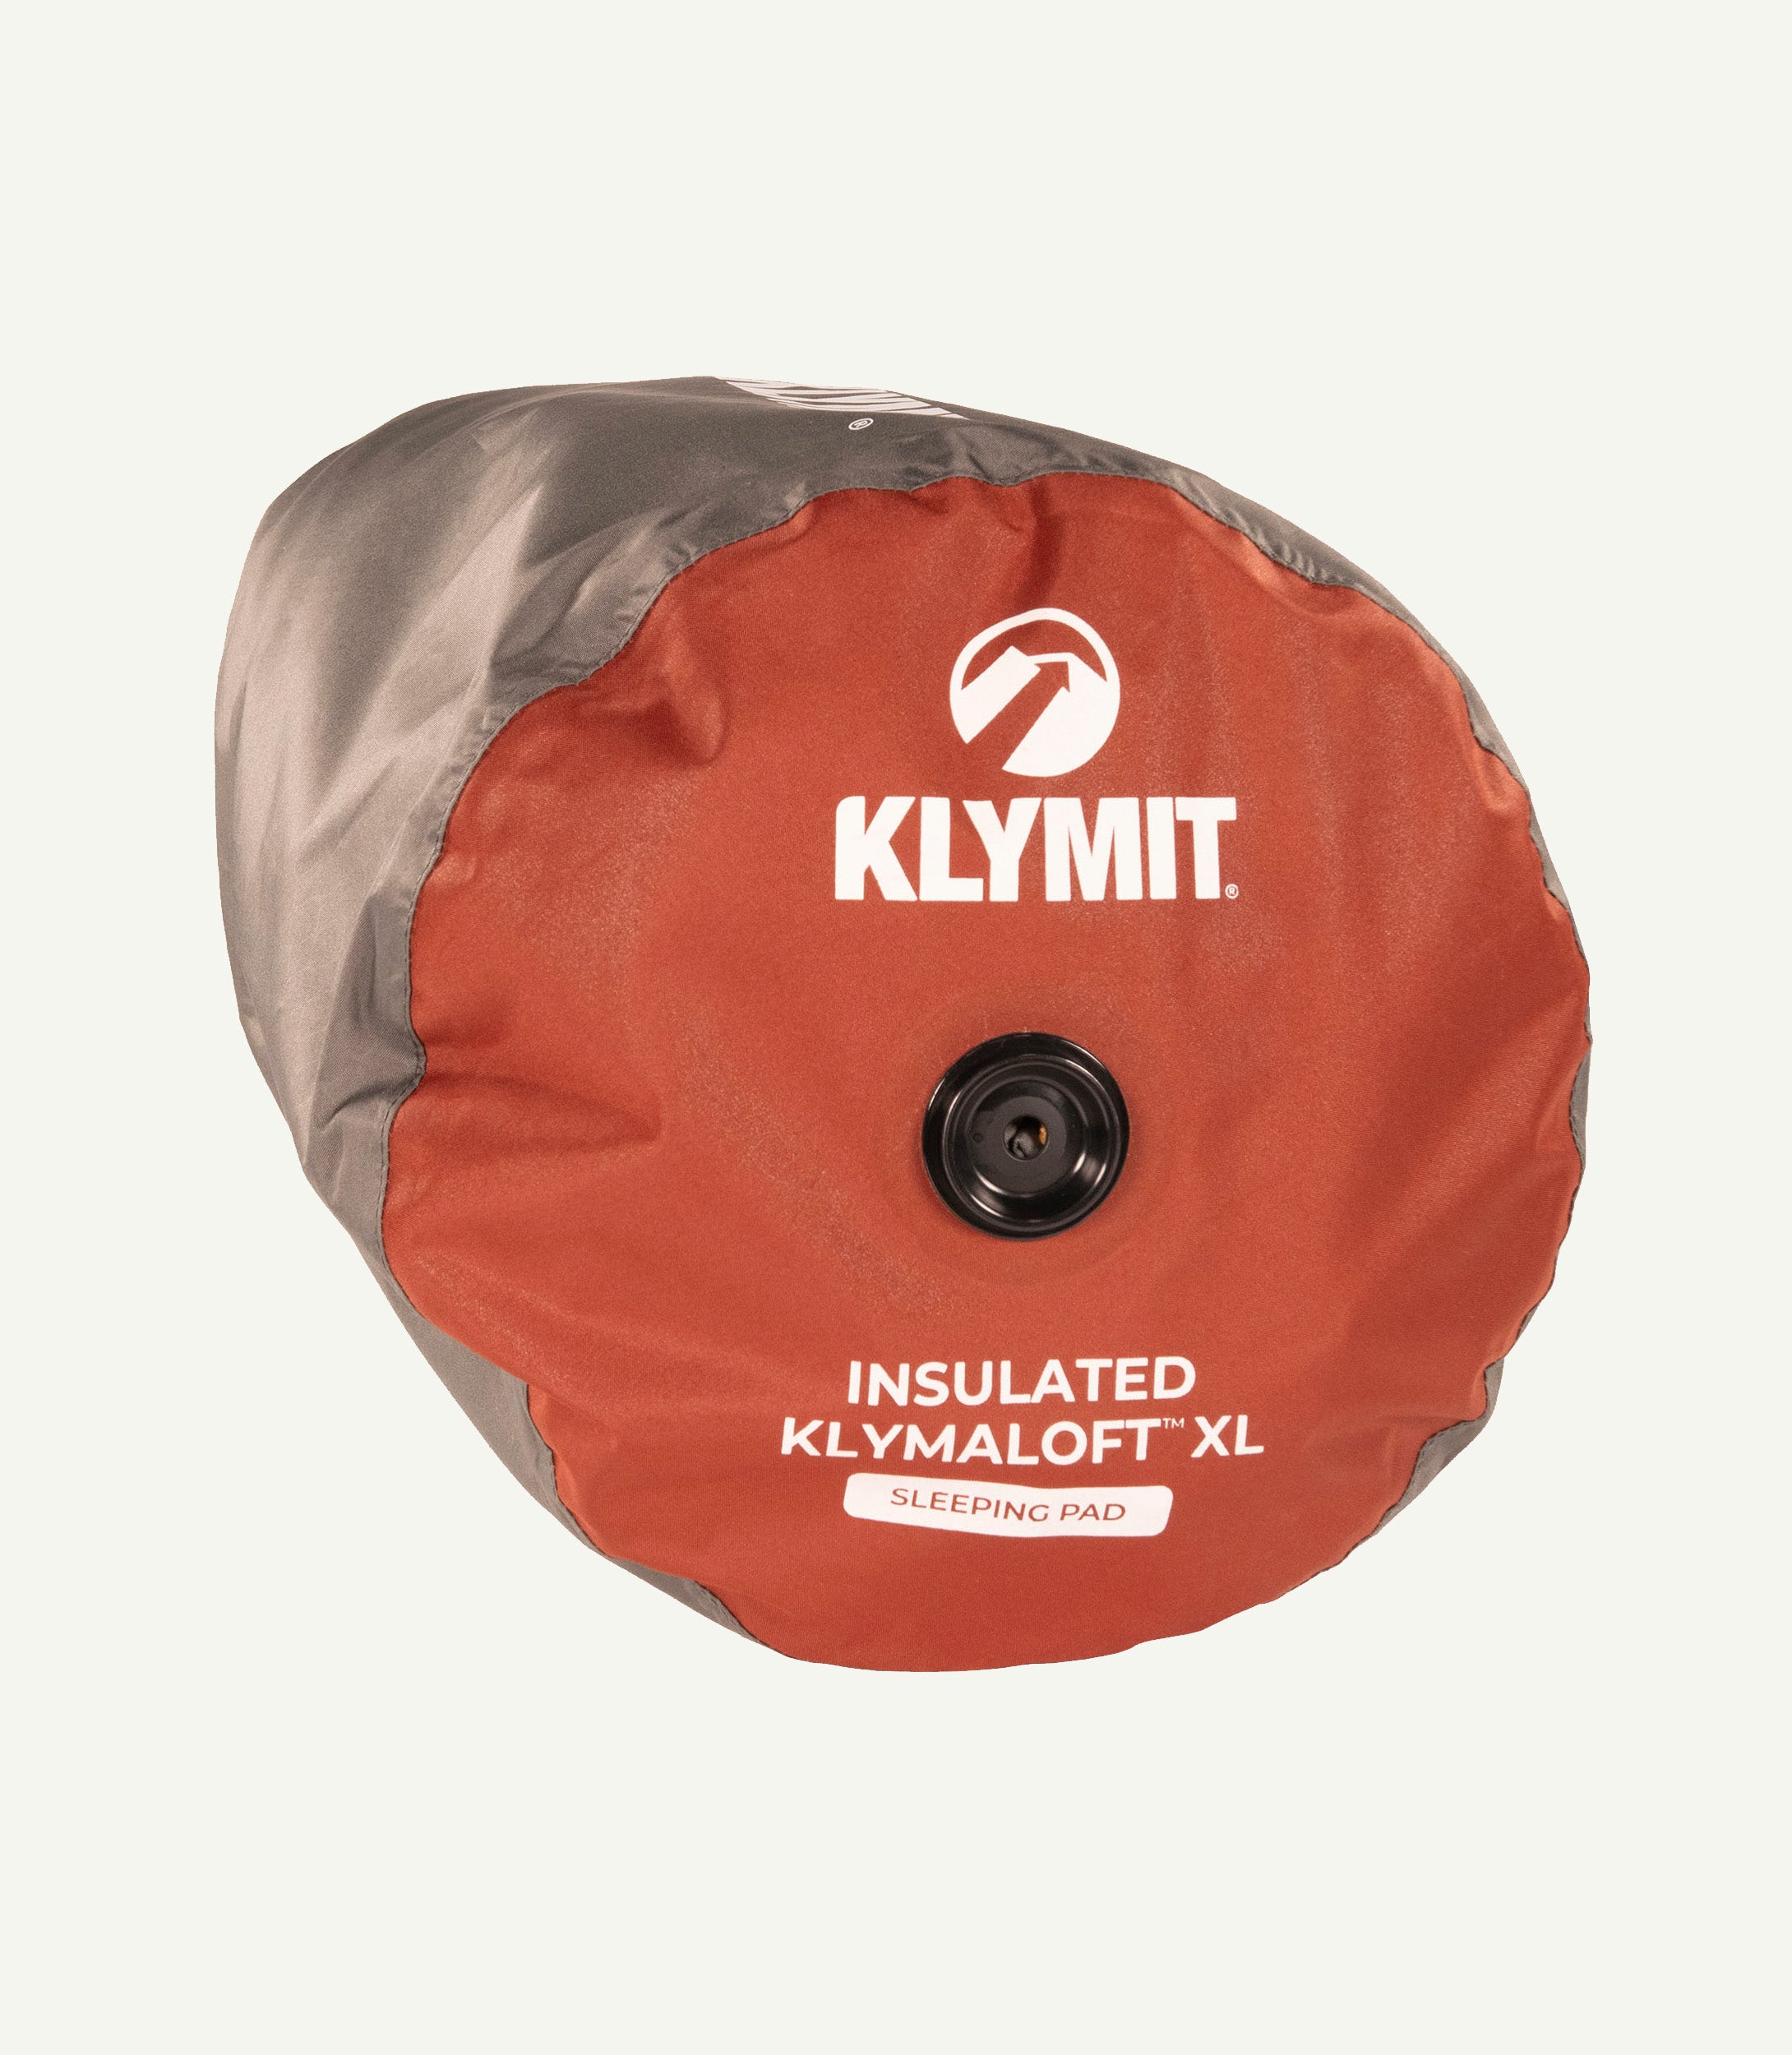 Insulated Klymaloft™ XL Sleeping Pad